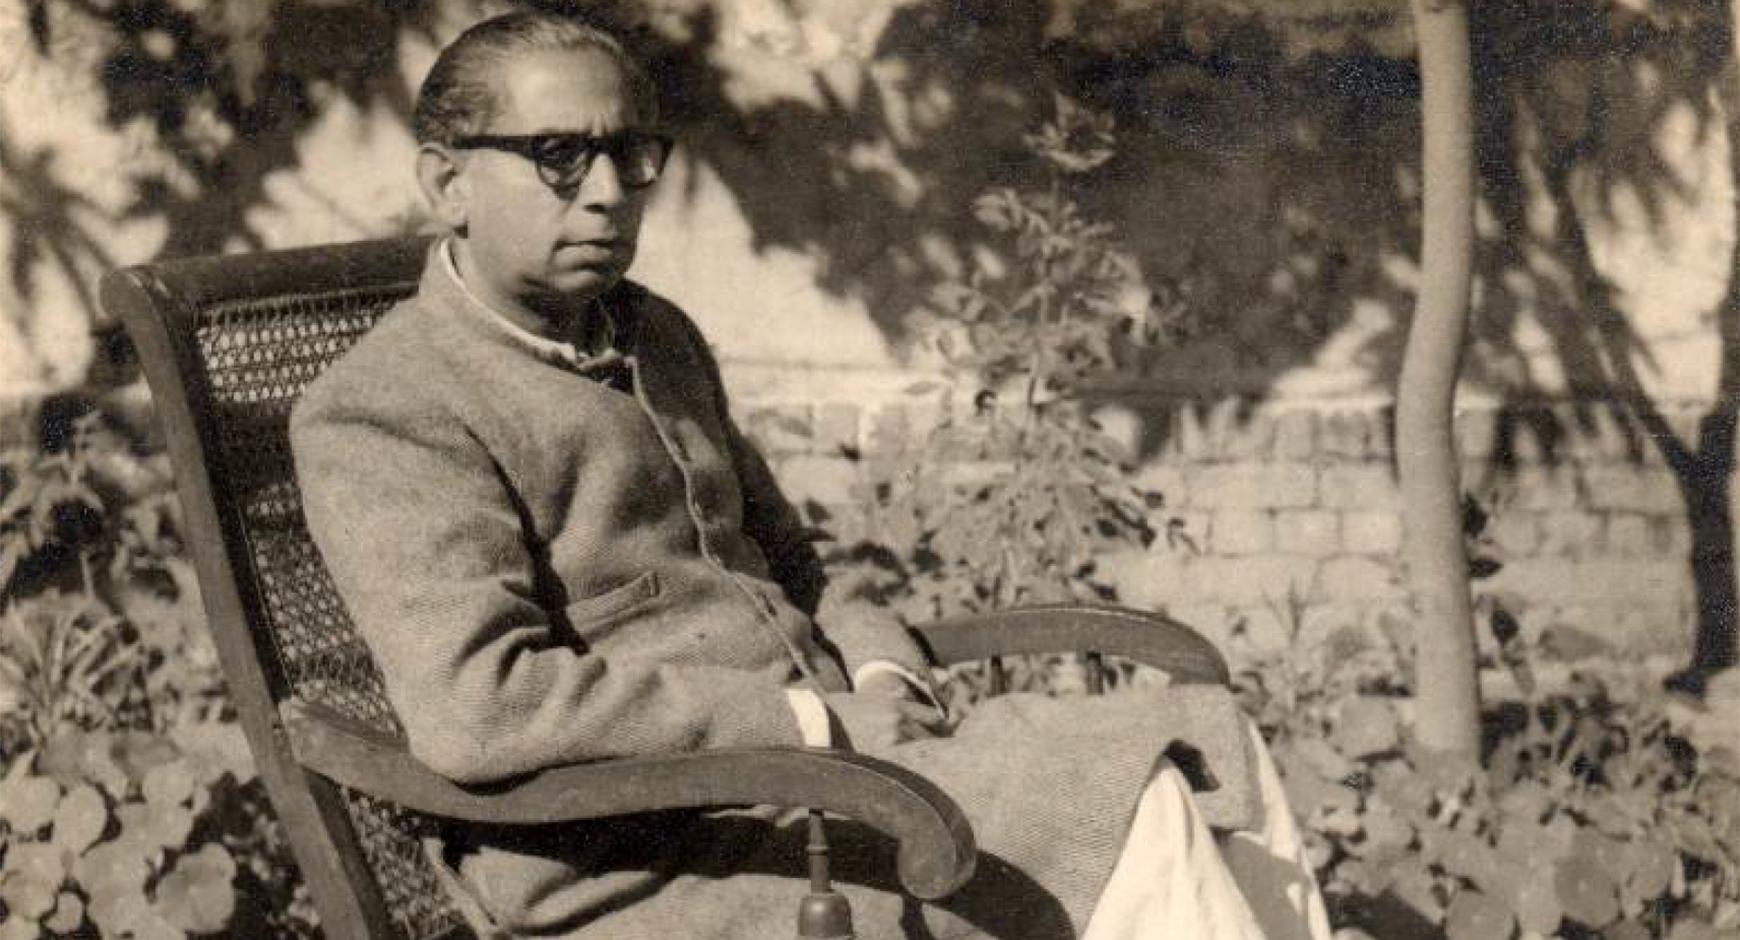 urdu writer sajjad zaheer reclining in chair. black and white.